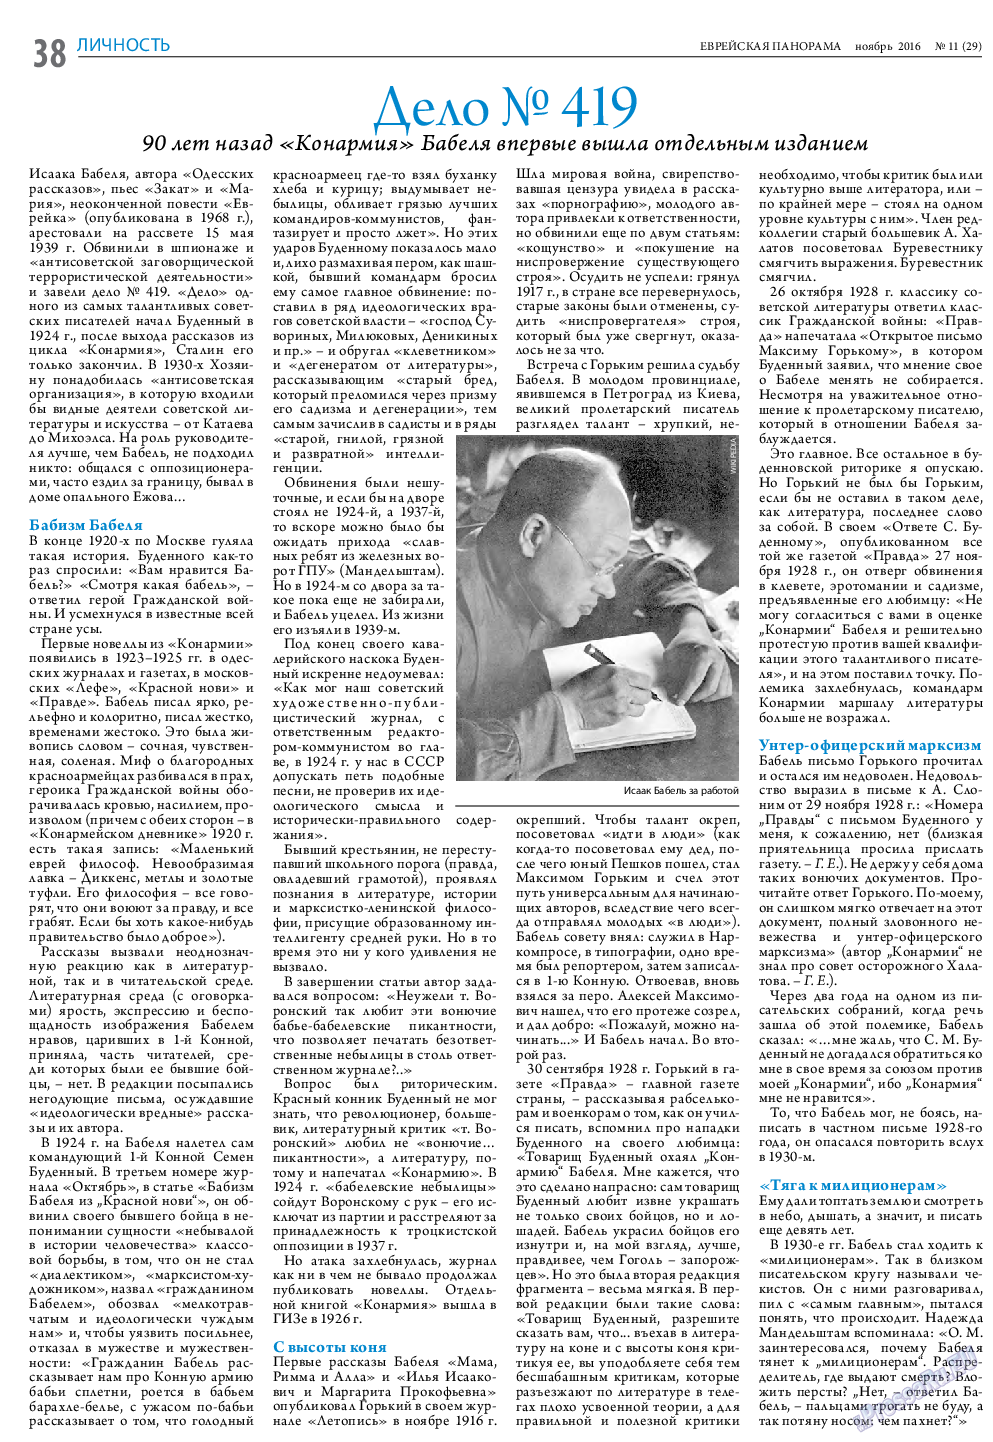 Еврейская панорама, газета. 2016 №11 стр.38